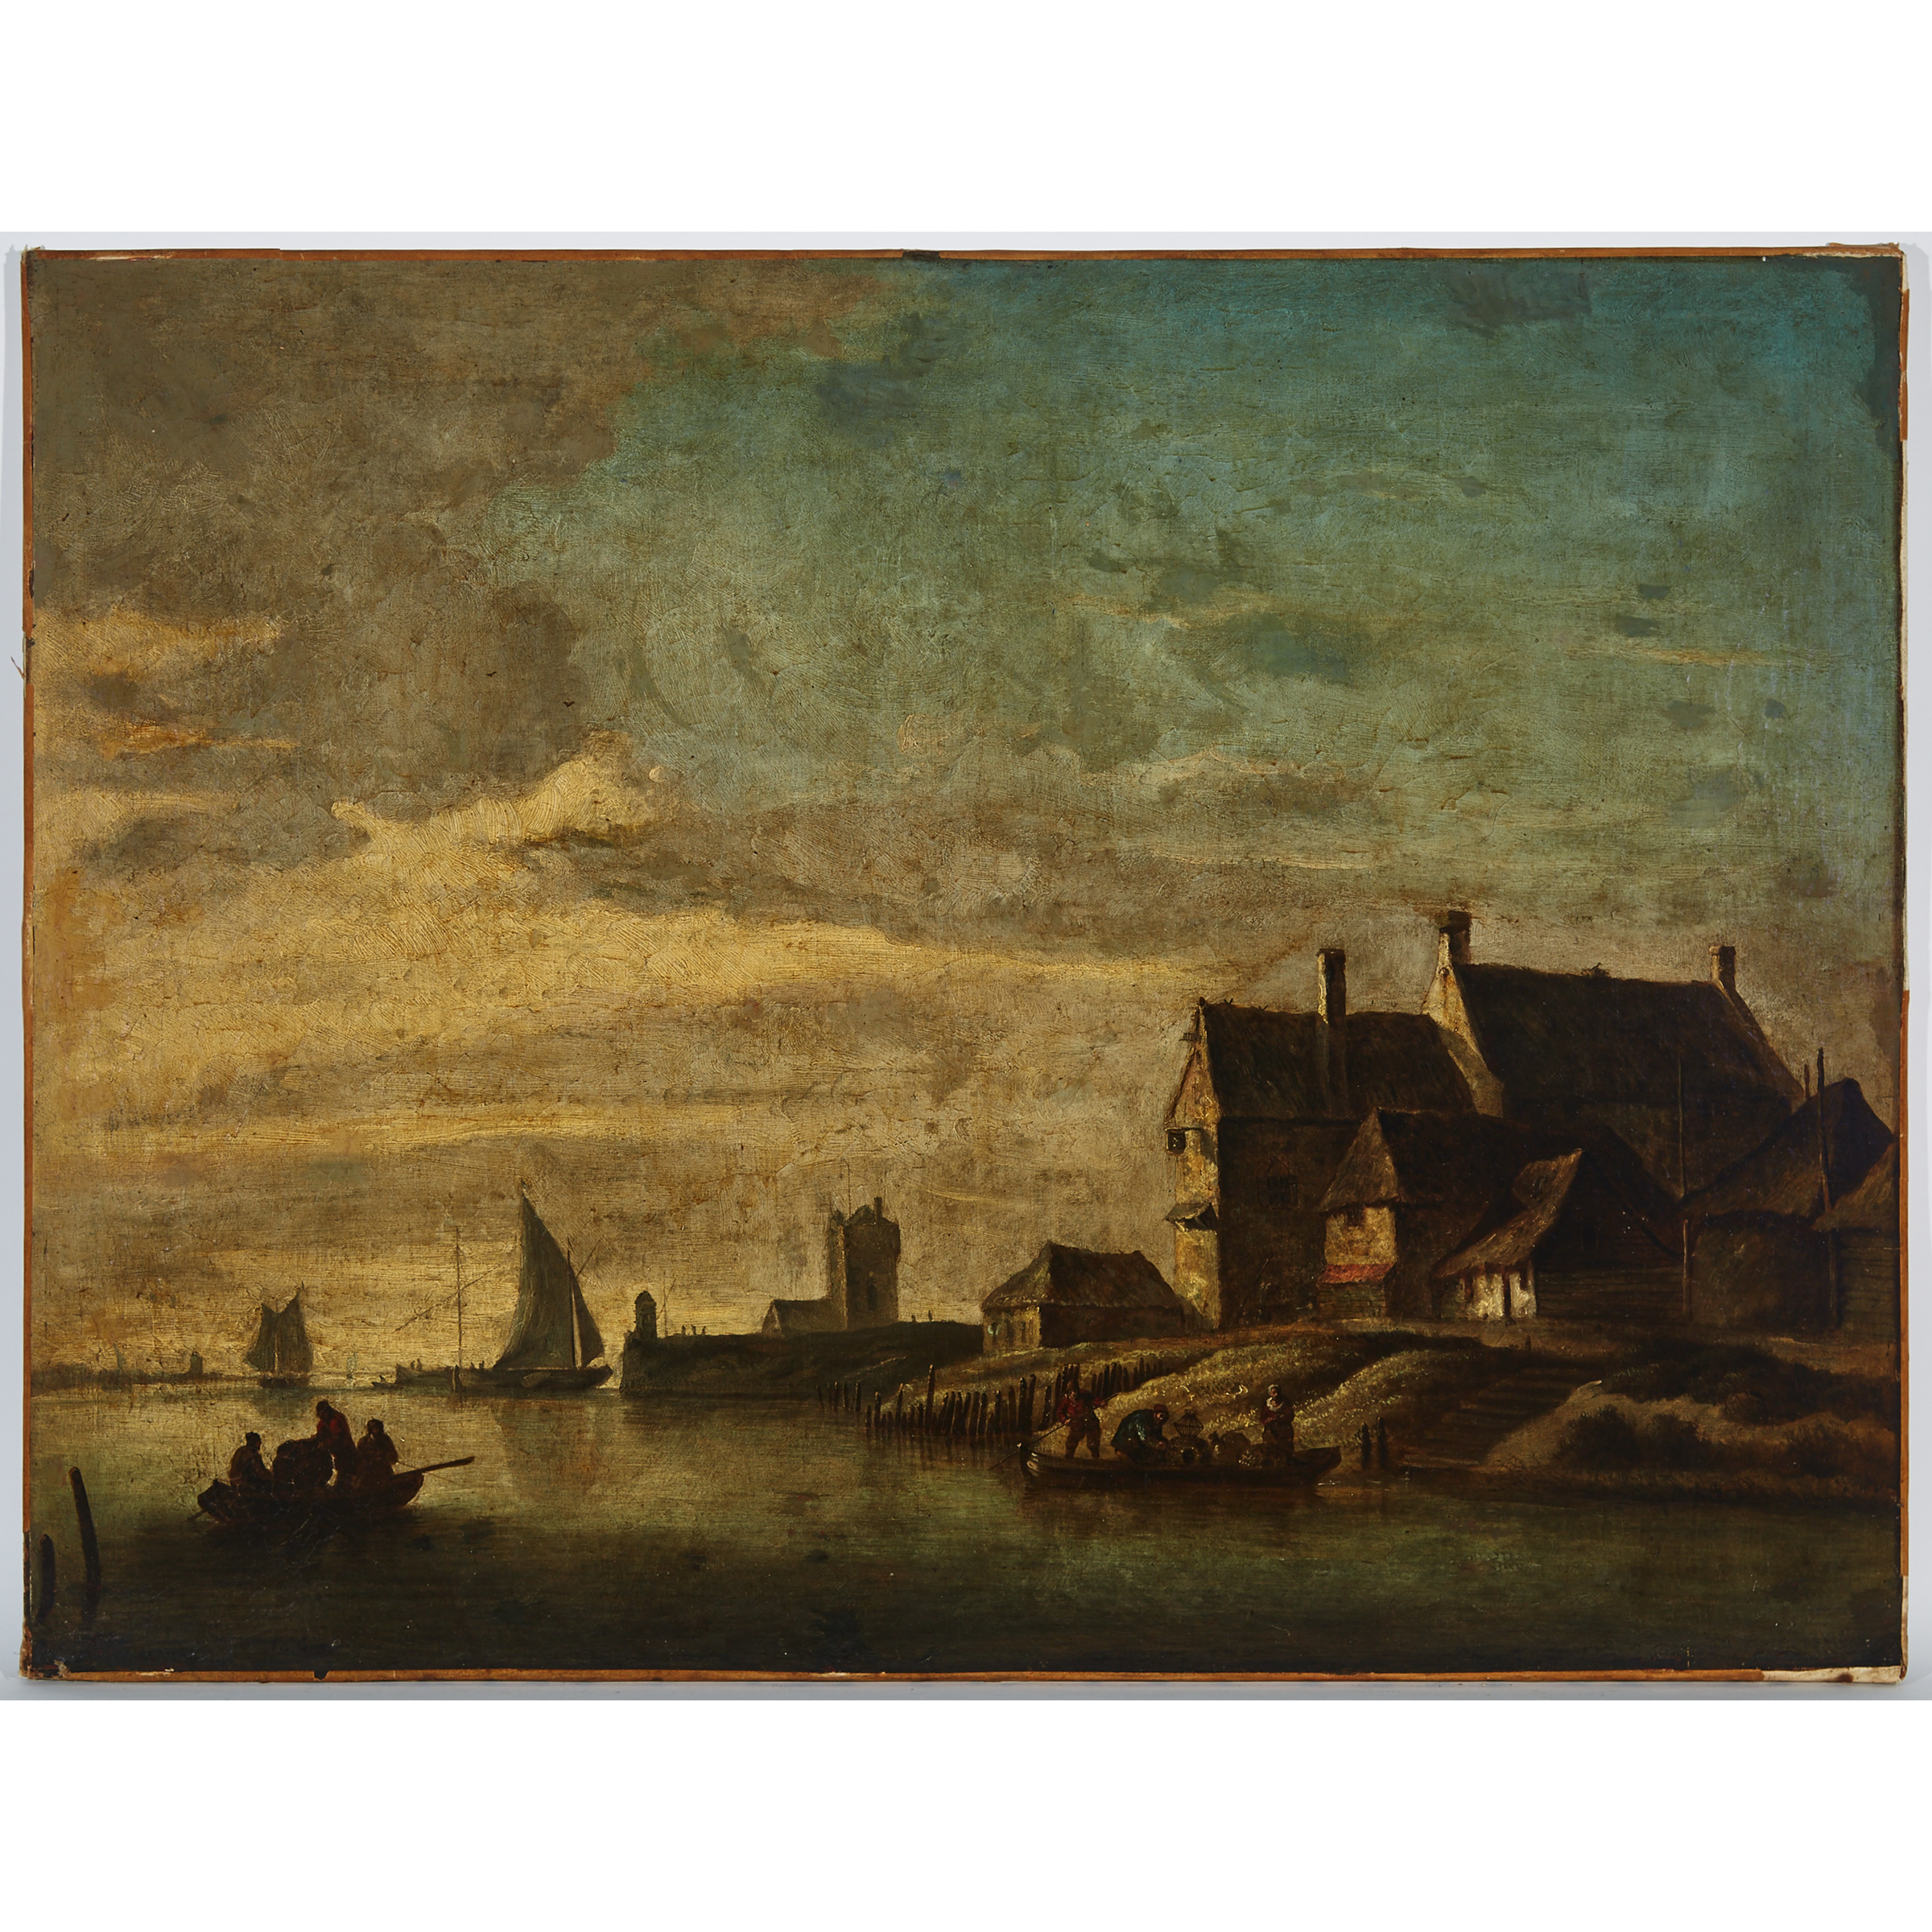 Attributed to Jan van Goyen (1596-1656)